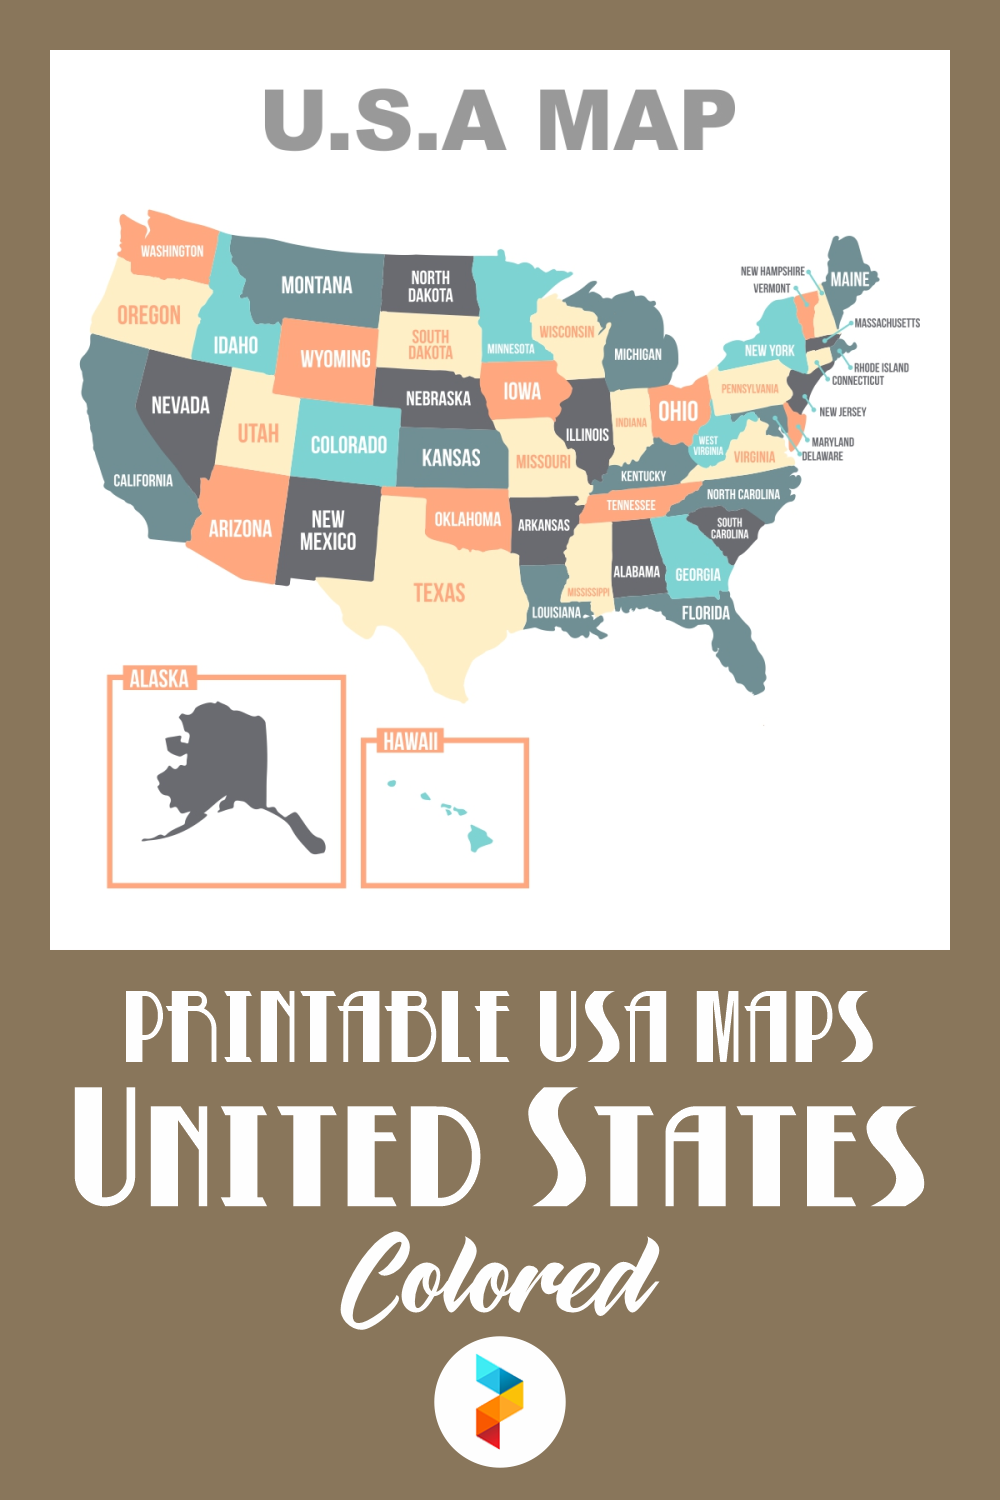 Printable USA Maps United States Colored